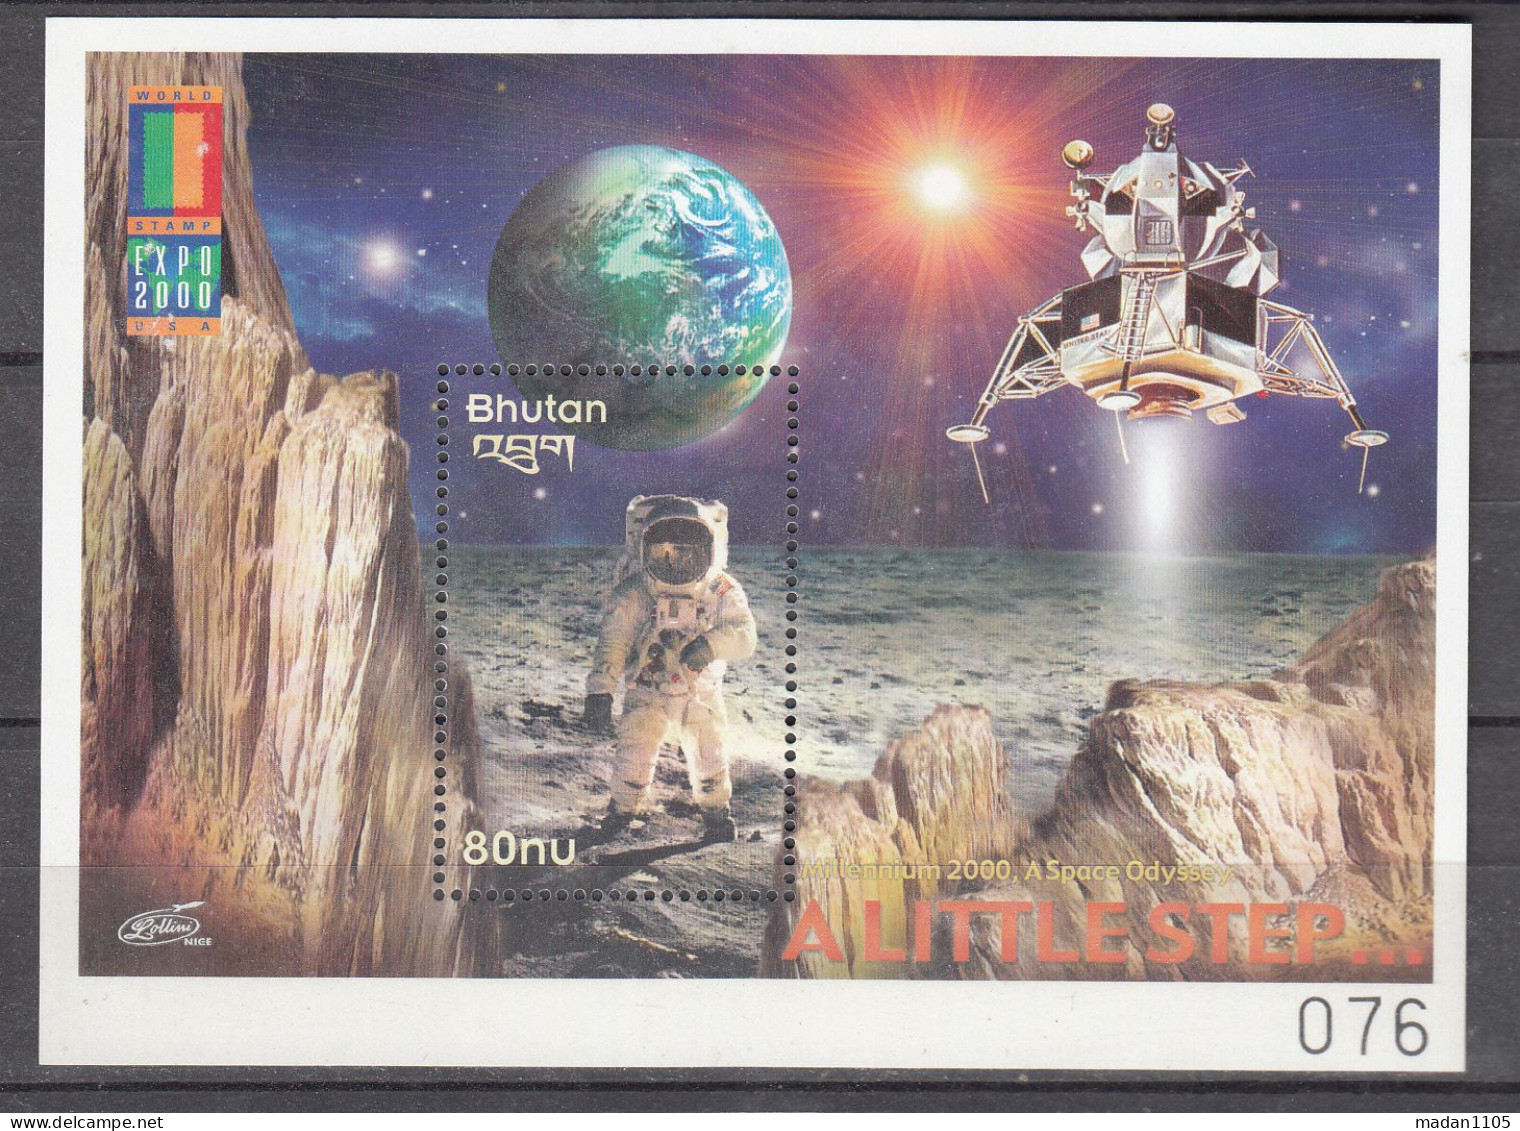 BHUTAN, 2000, International Stamp Exhibition "WORLD STAMP EXPO 2000" - Anaheim, California, USA - Space, MS, MNH, (**) - Bhutan